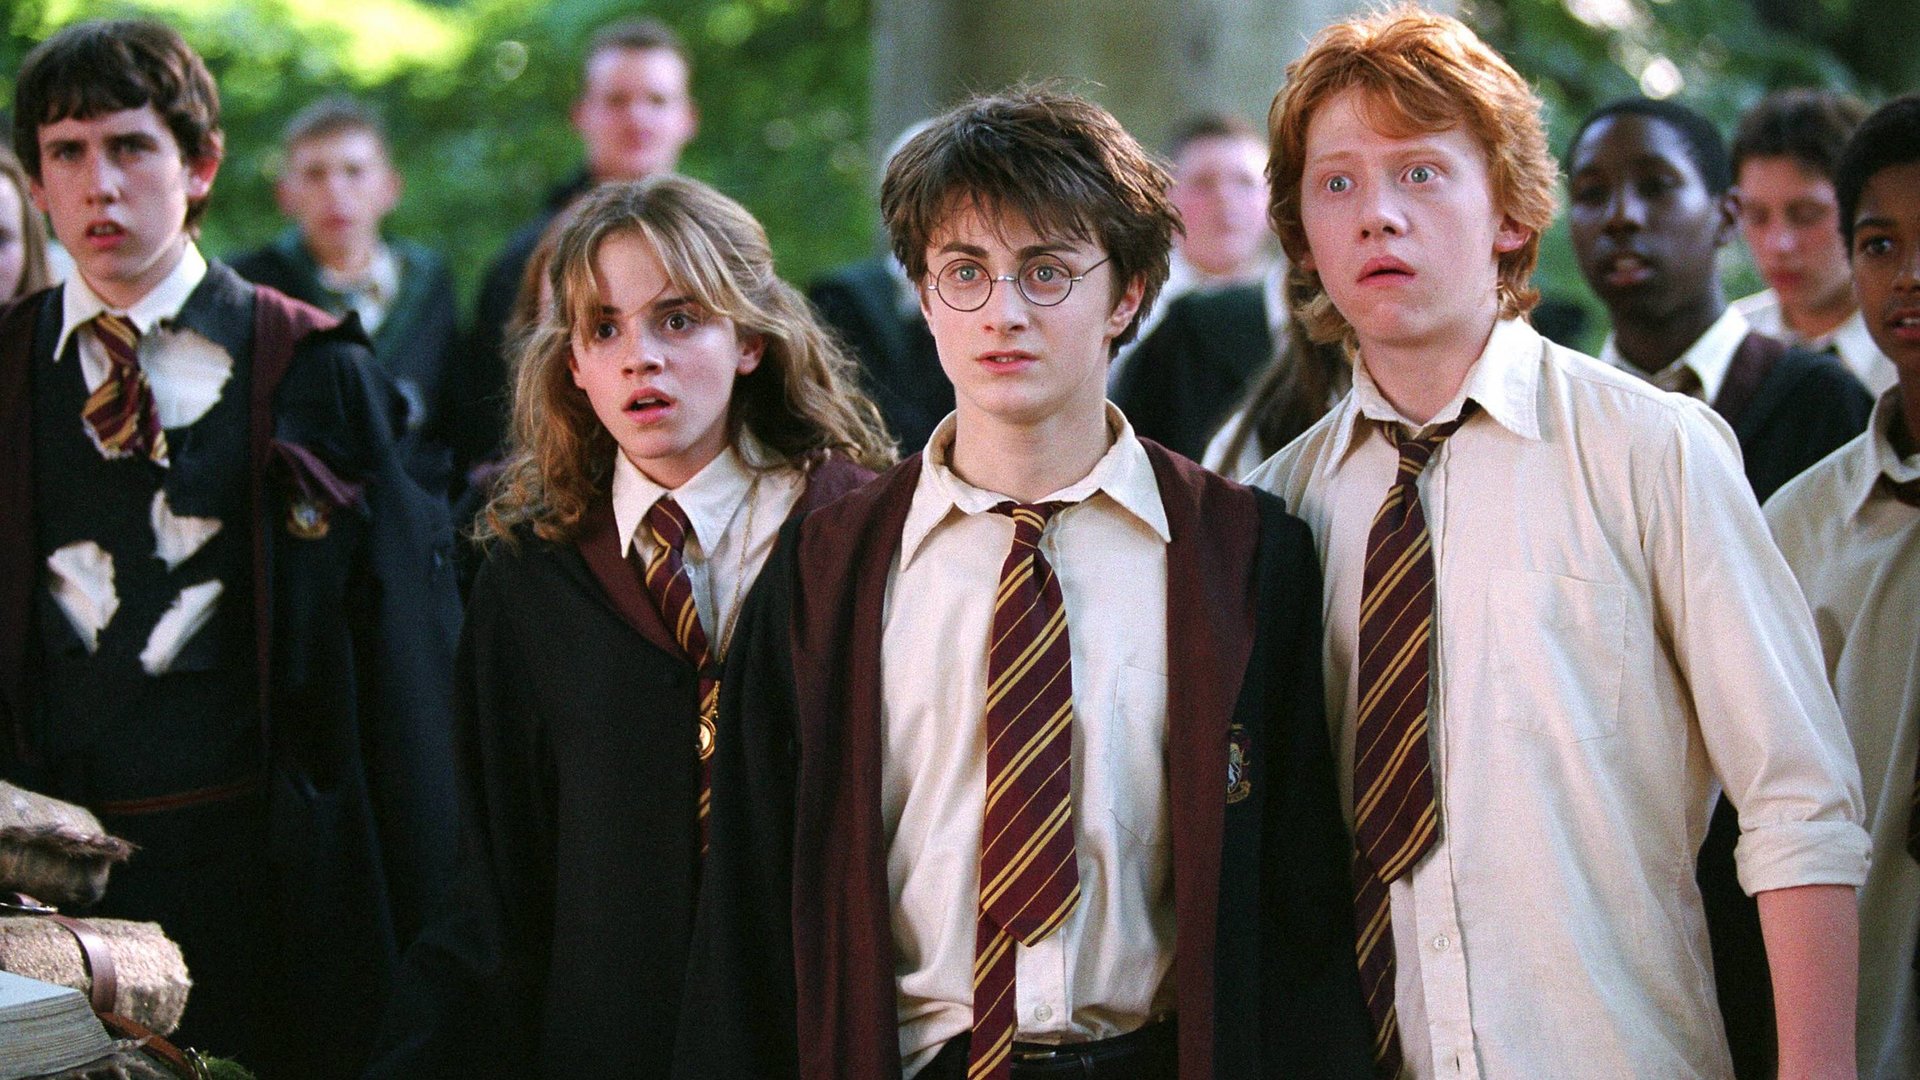 Harry Potter  Harry potter lustig, Harry-potter-zitate, Harry potter bücher